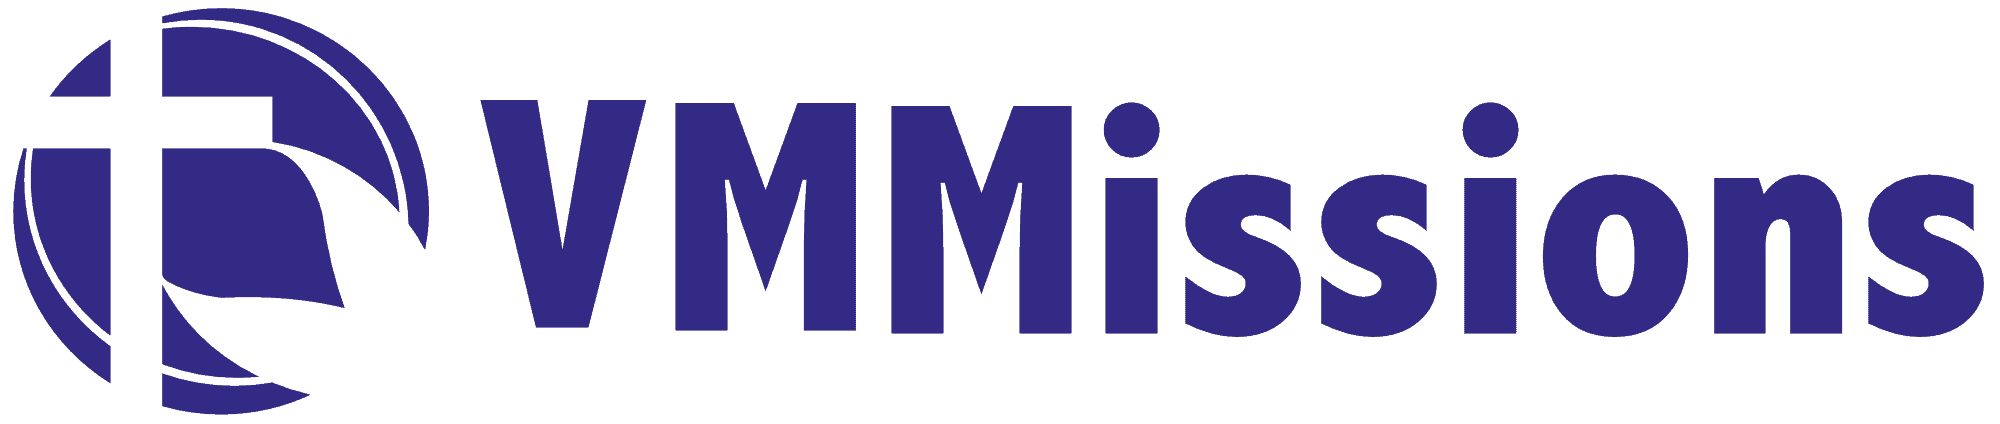 VMMissions_blue_logo